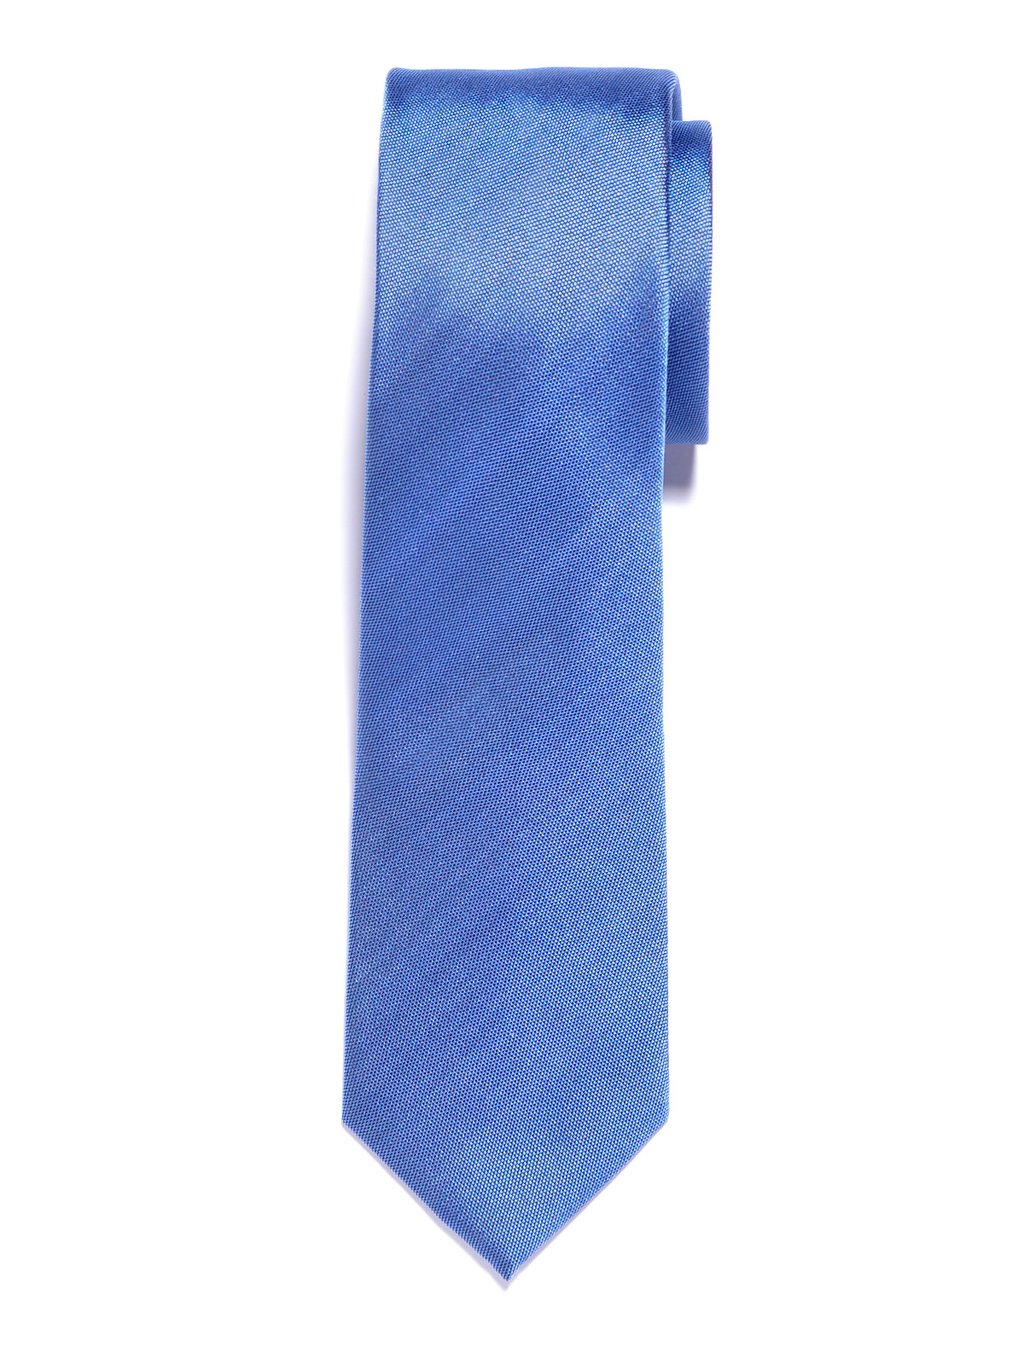 Solid Light Blue Silk Tie